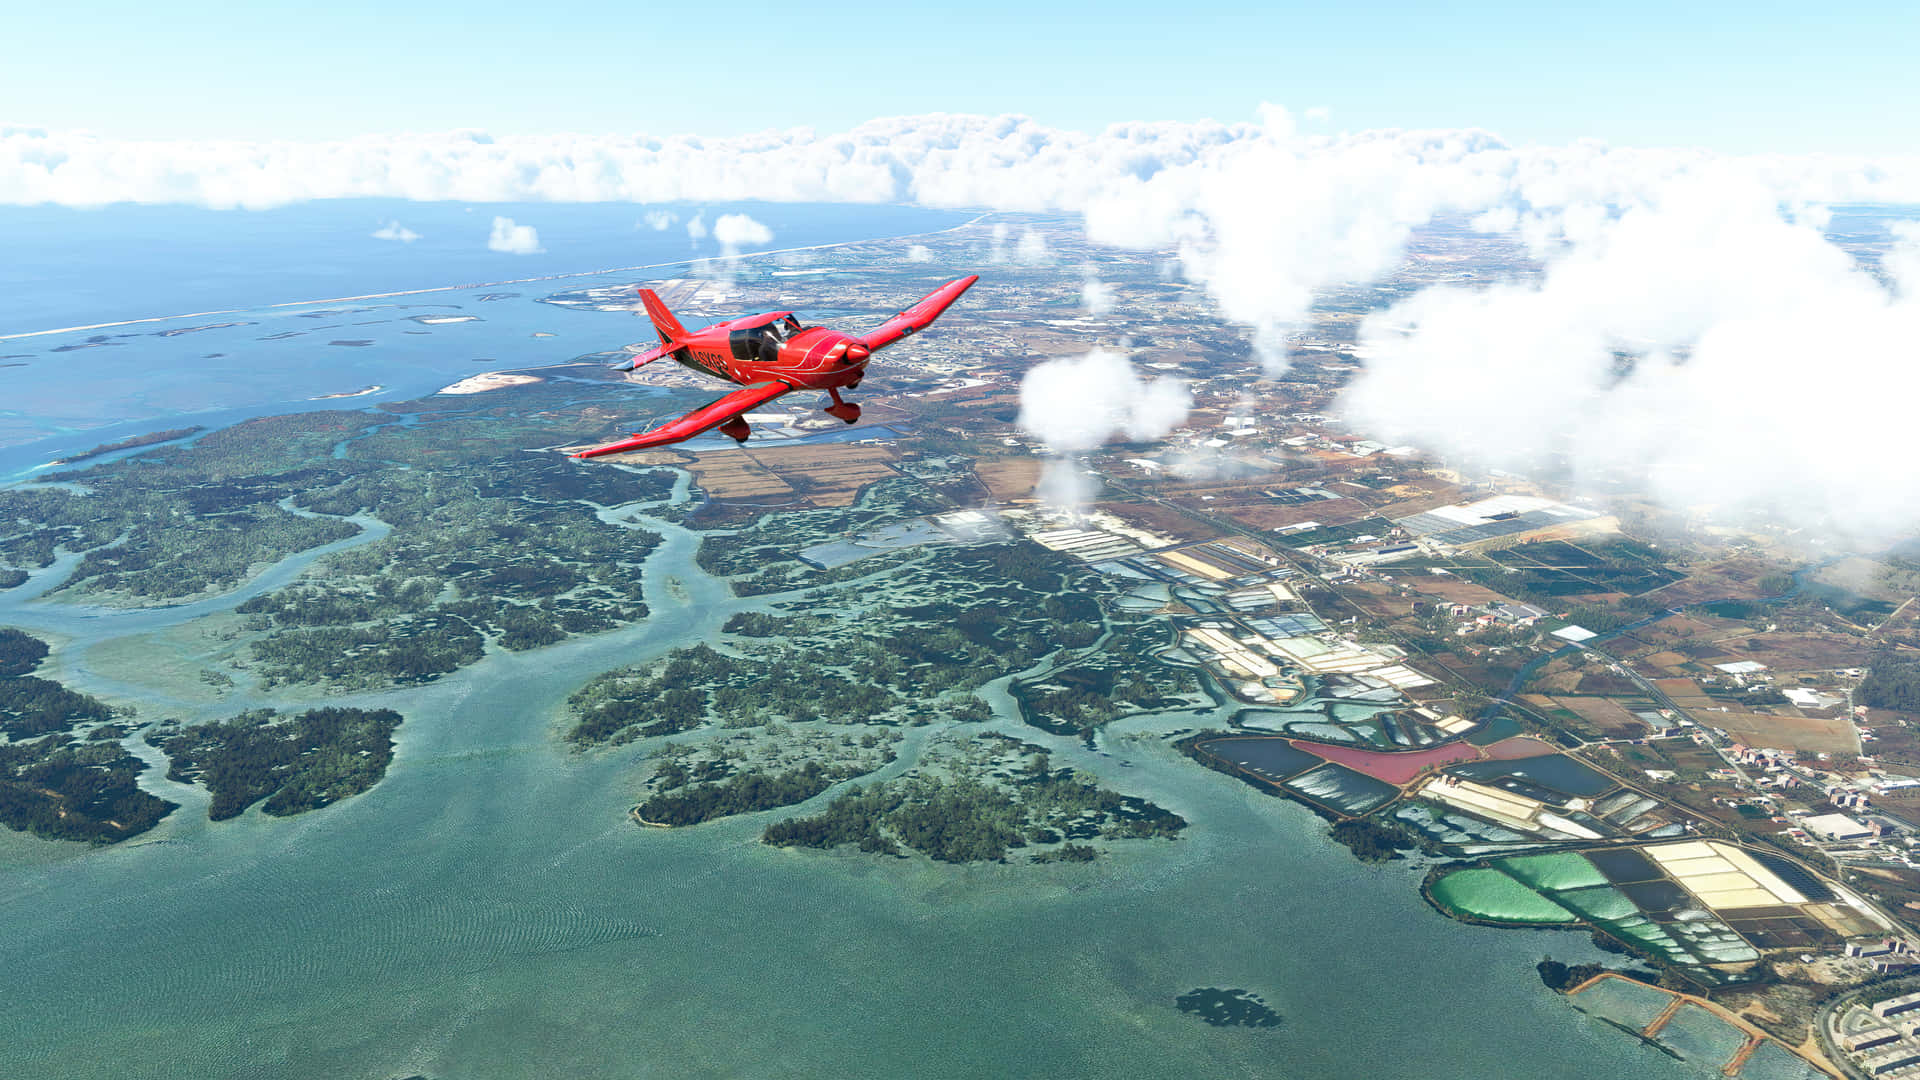 Marvelous 4K Resolution Display of Microsoft Flight Simulator in Action